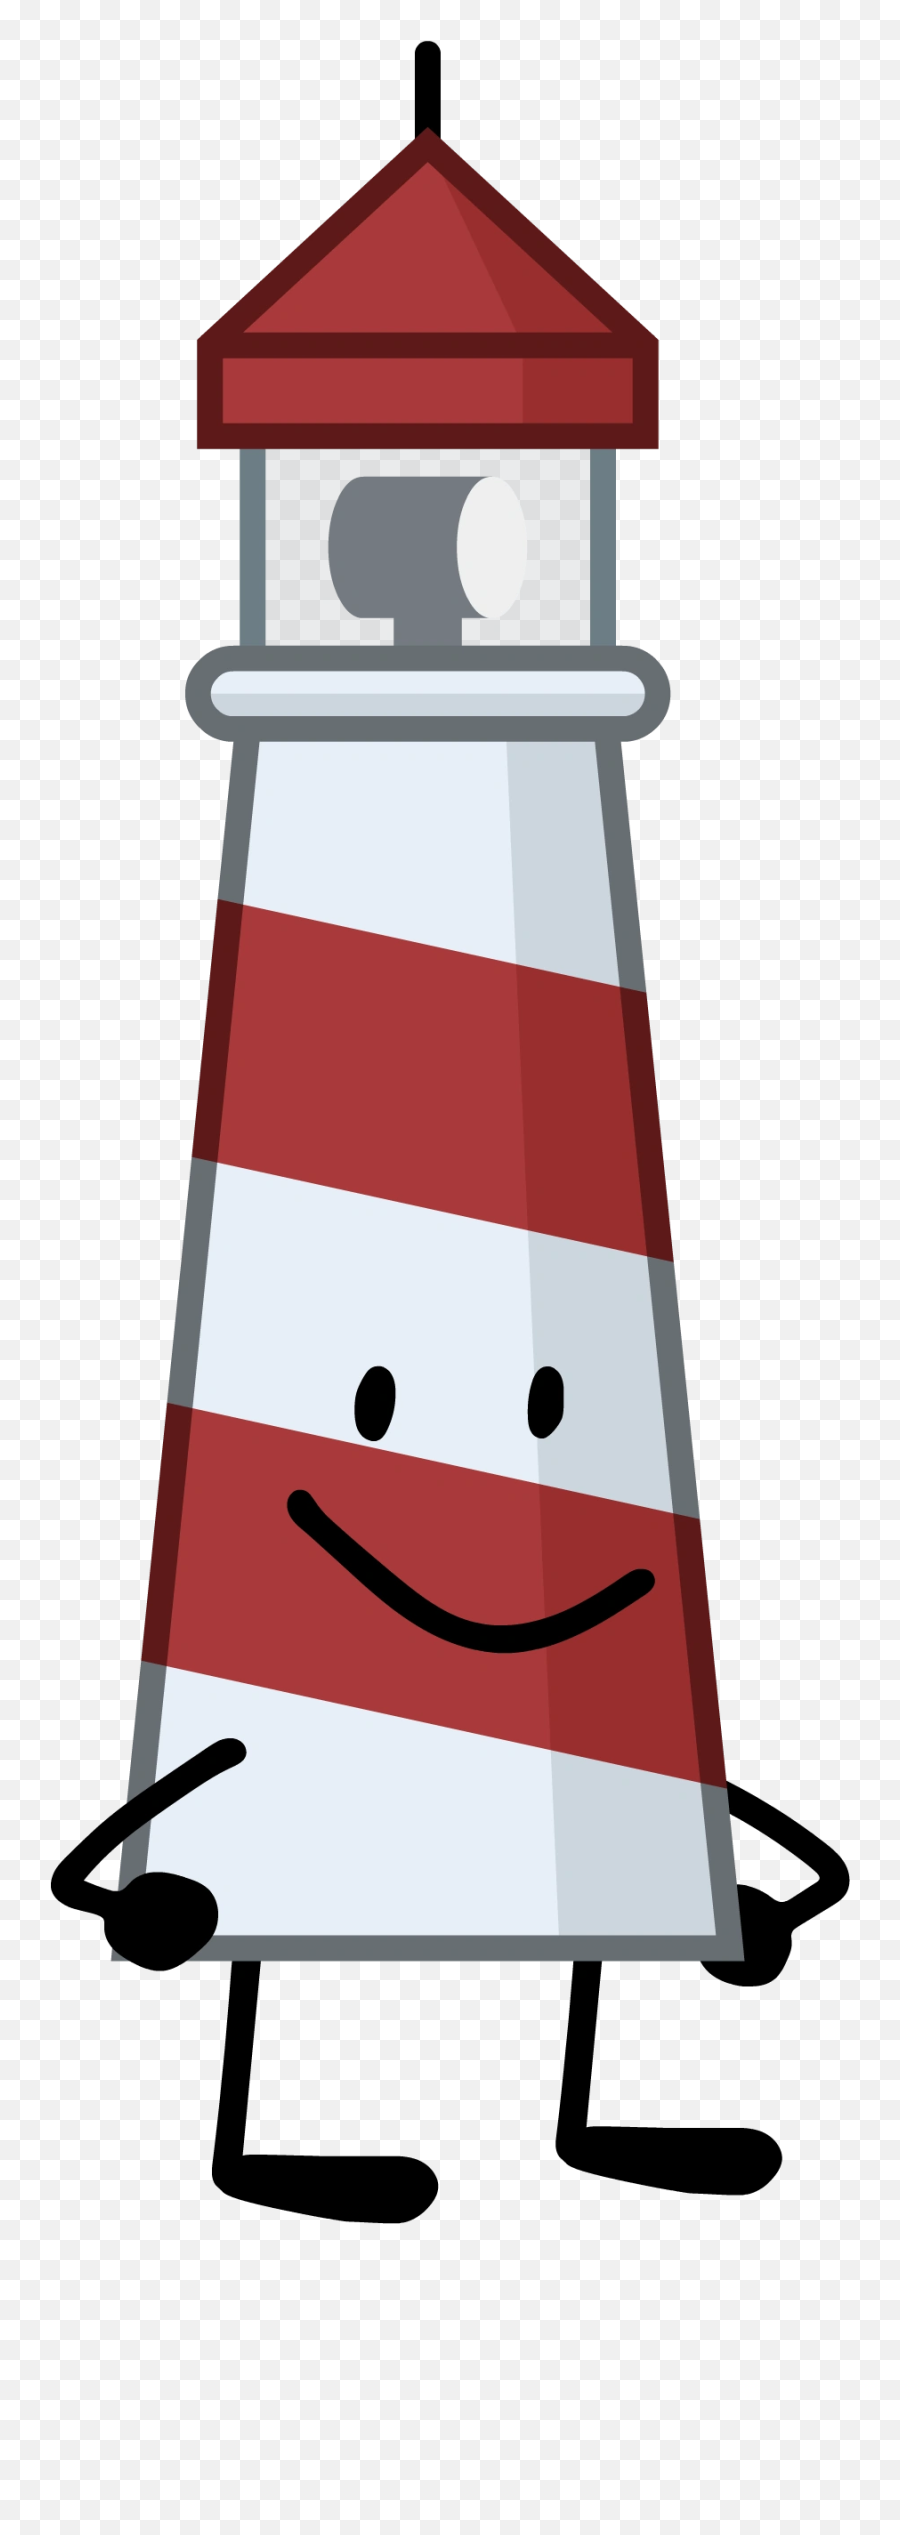 Lighthouse - Object Filler Again Lighthouse Emoji,Lighthouse Emoticon